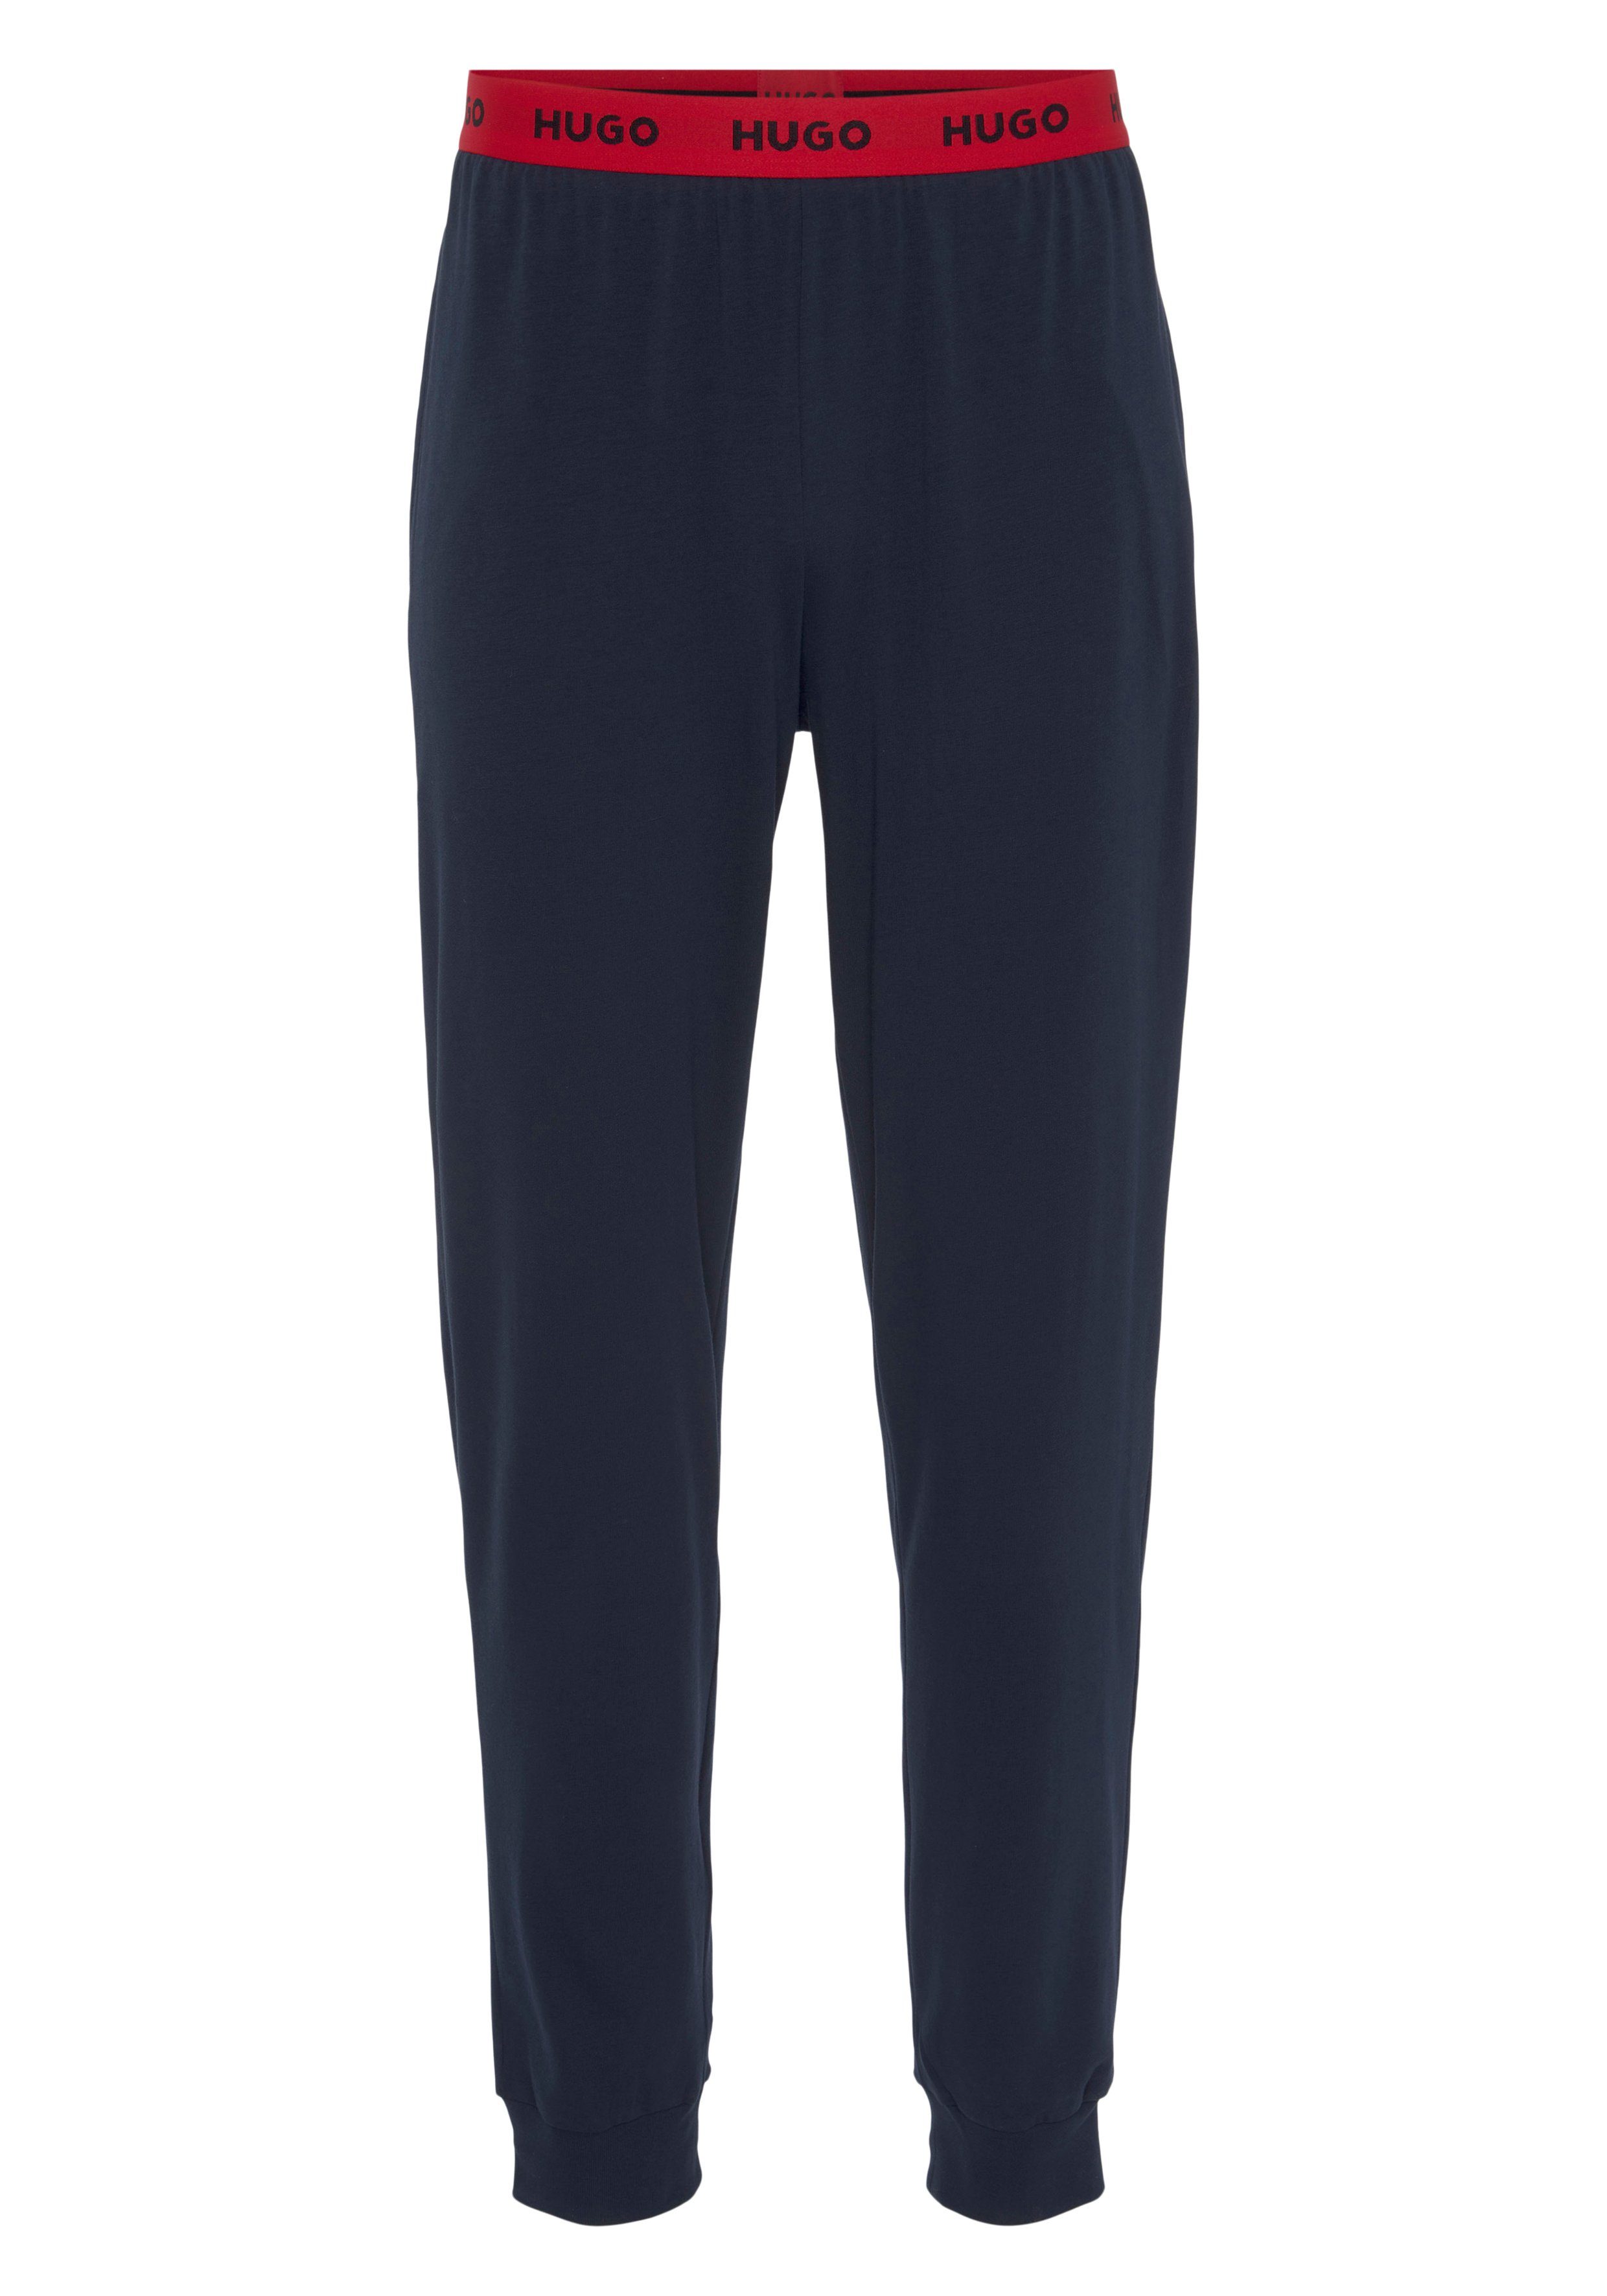 Pants HUGO kontrastfarbenen mit Logo-Elastikbund Pyjamahose Dark Blue405 Linked